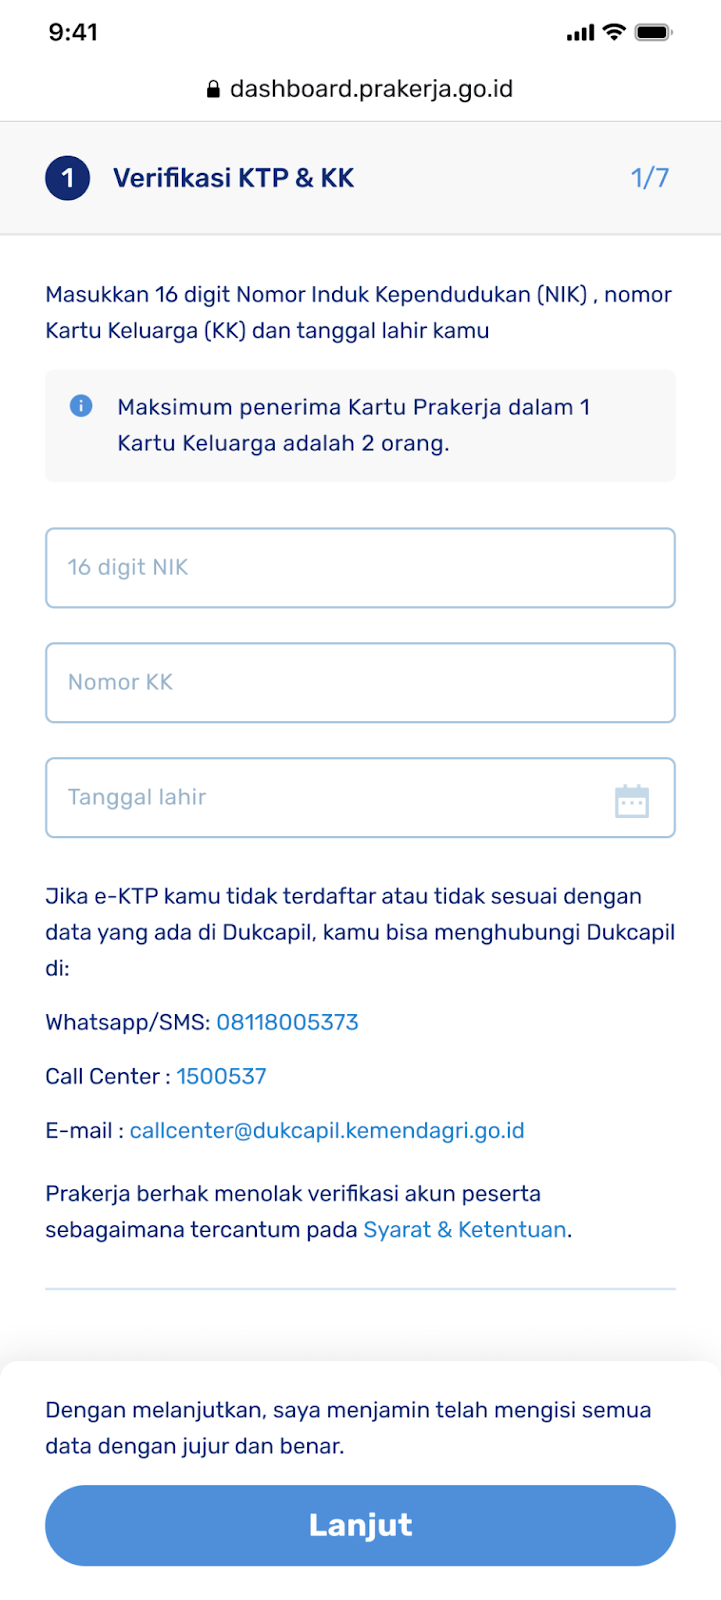 Form verifikasi KTP & KK Prakerja